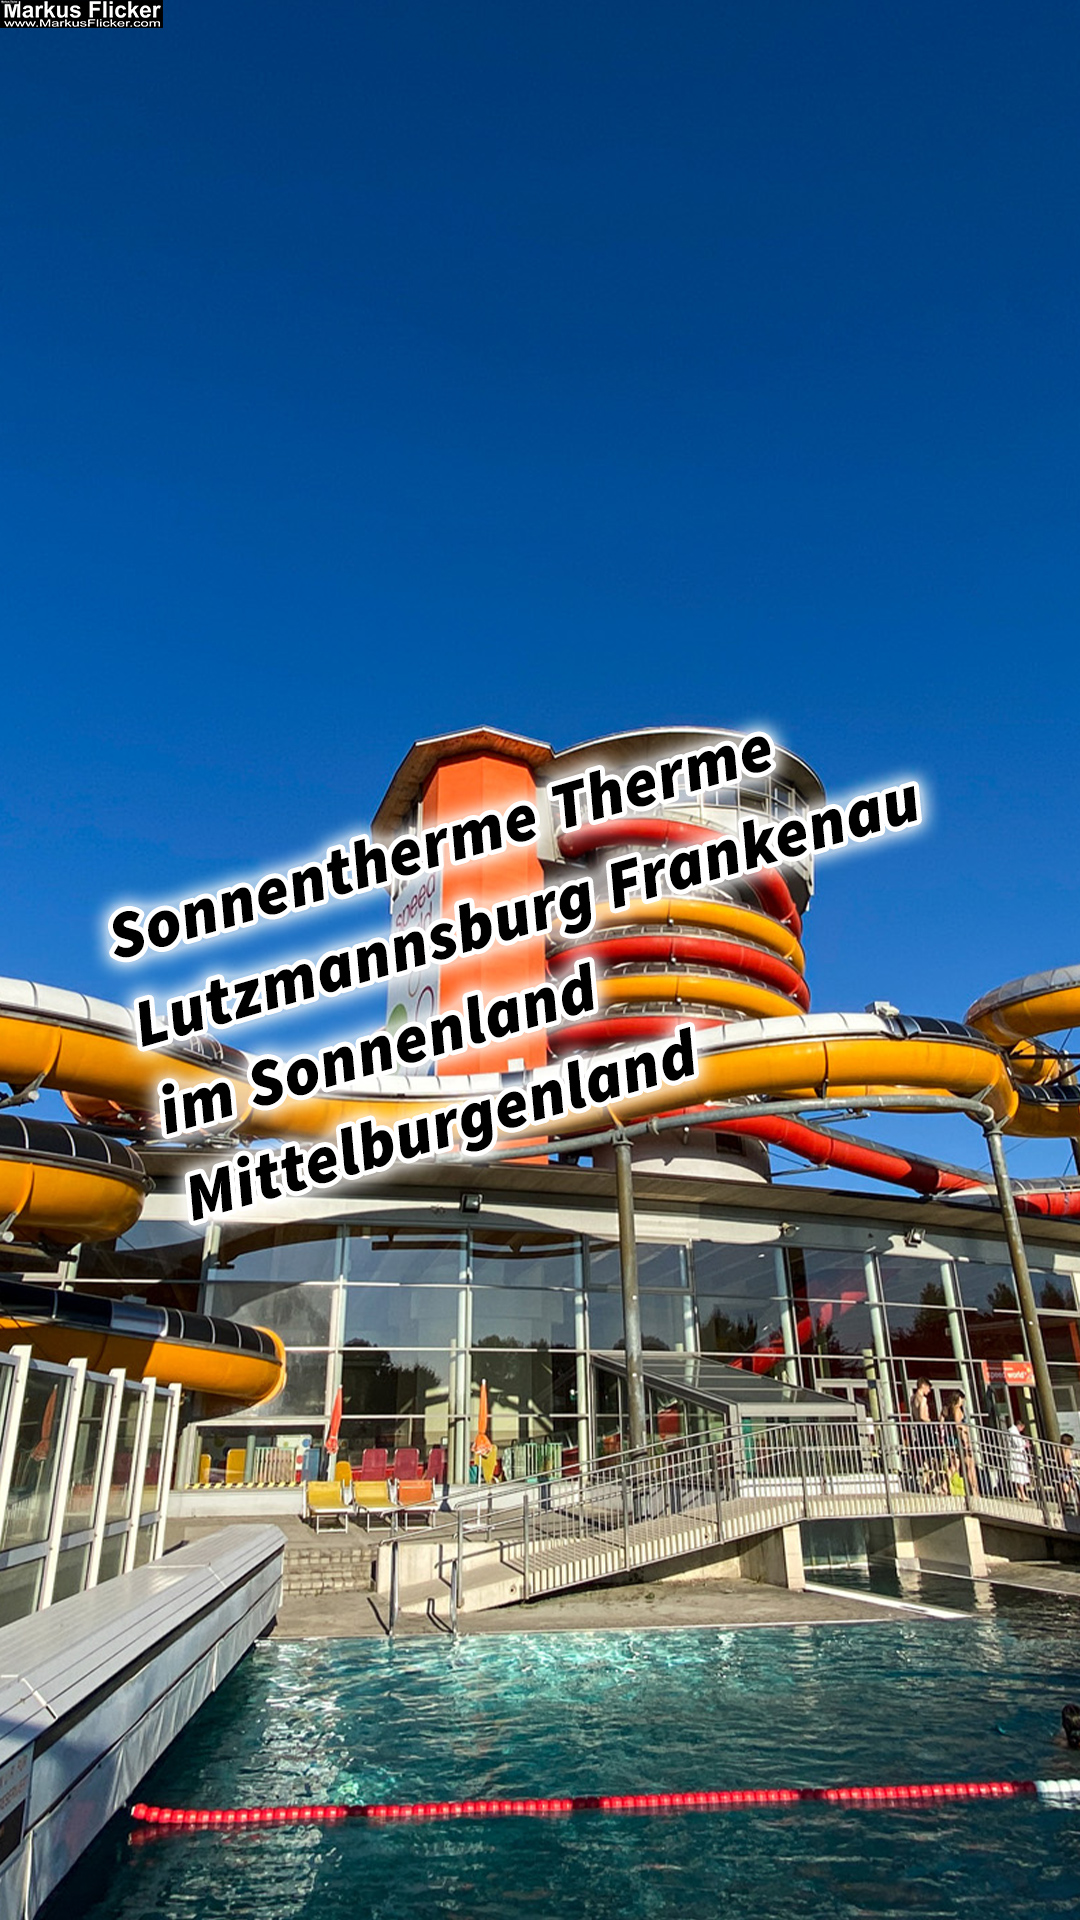 Sonnentherme Therme Lutzmannsburg Frankenau im Sonnenland Mittelburgenland #sonnentherme #visitburgenland